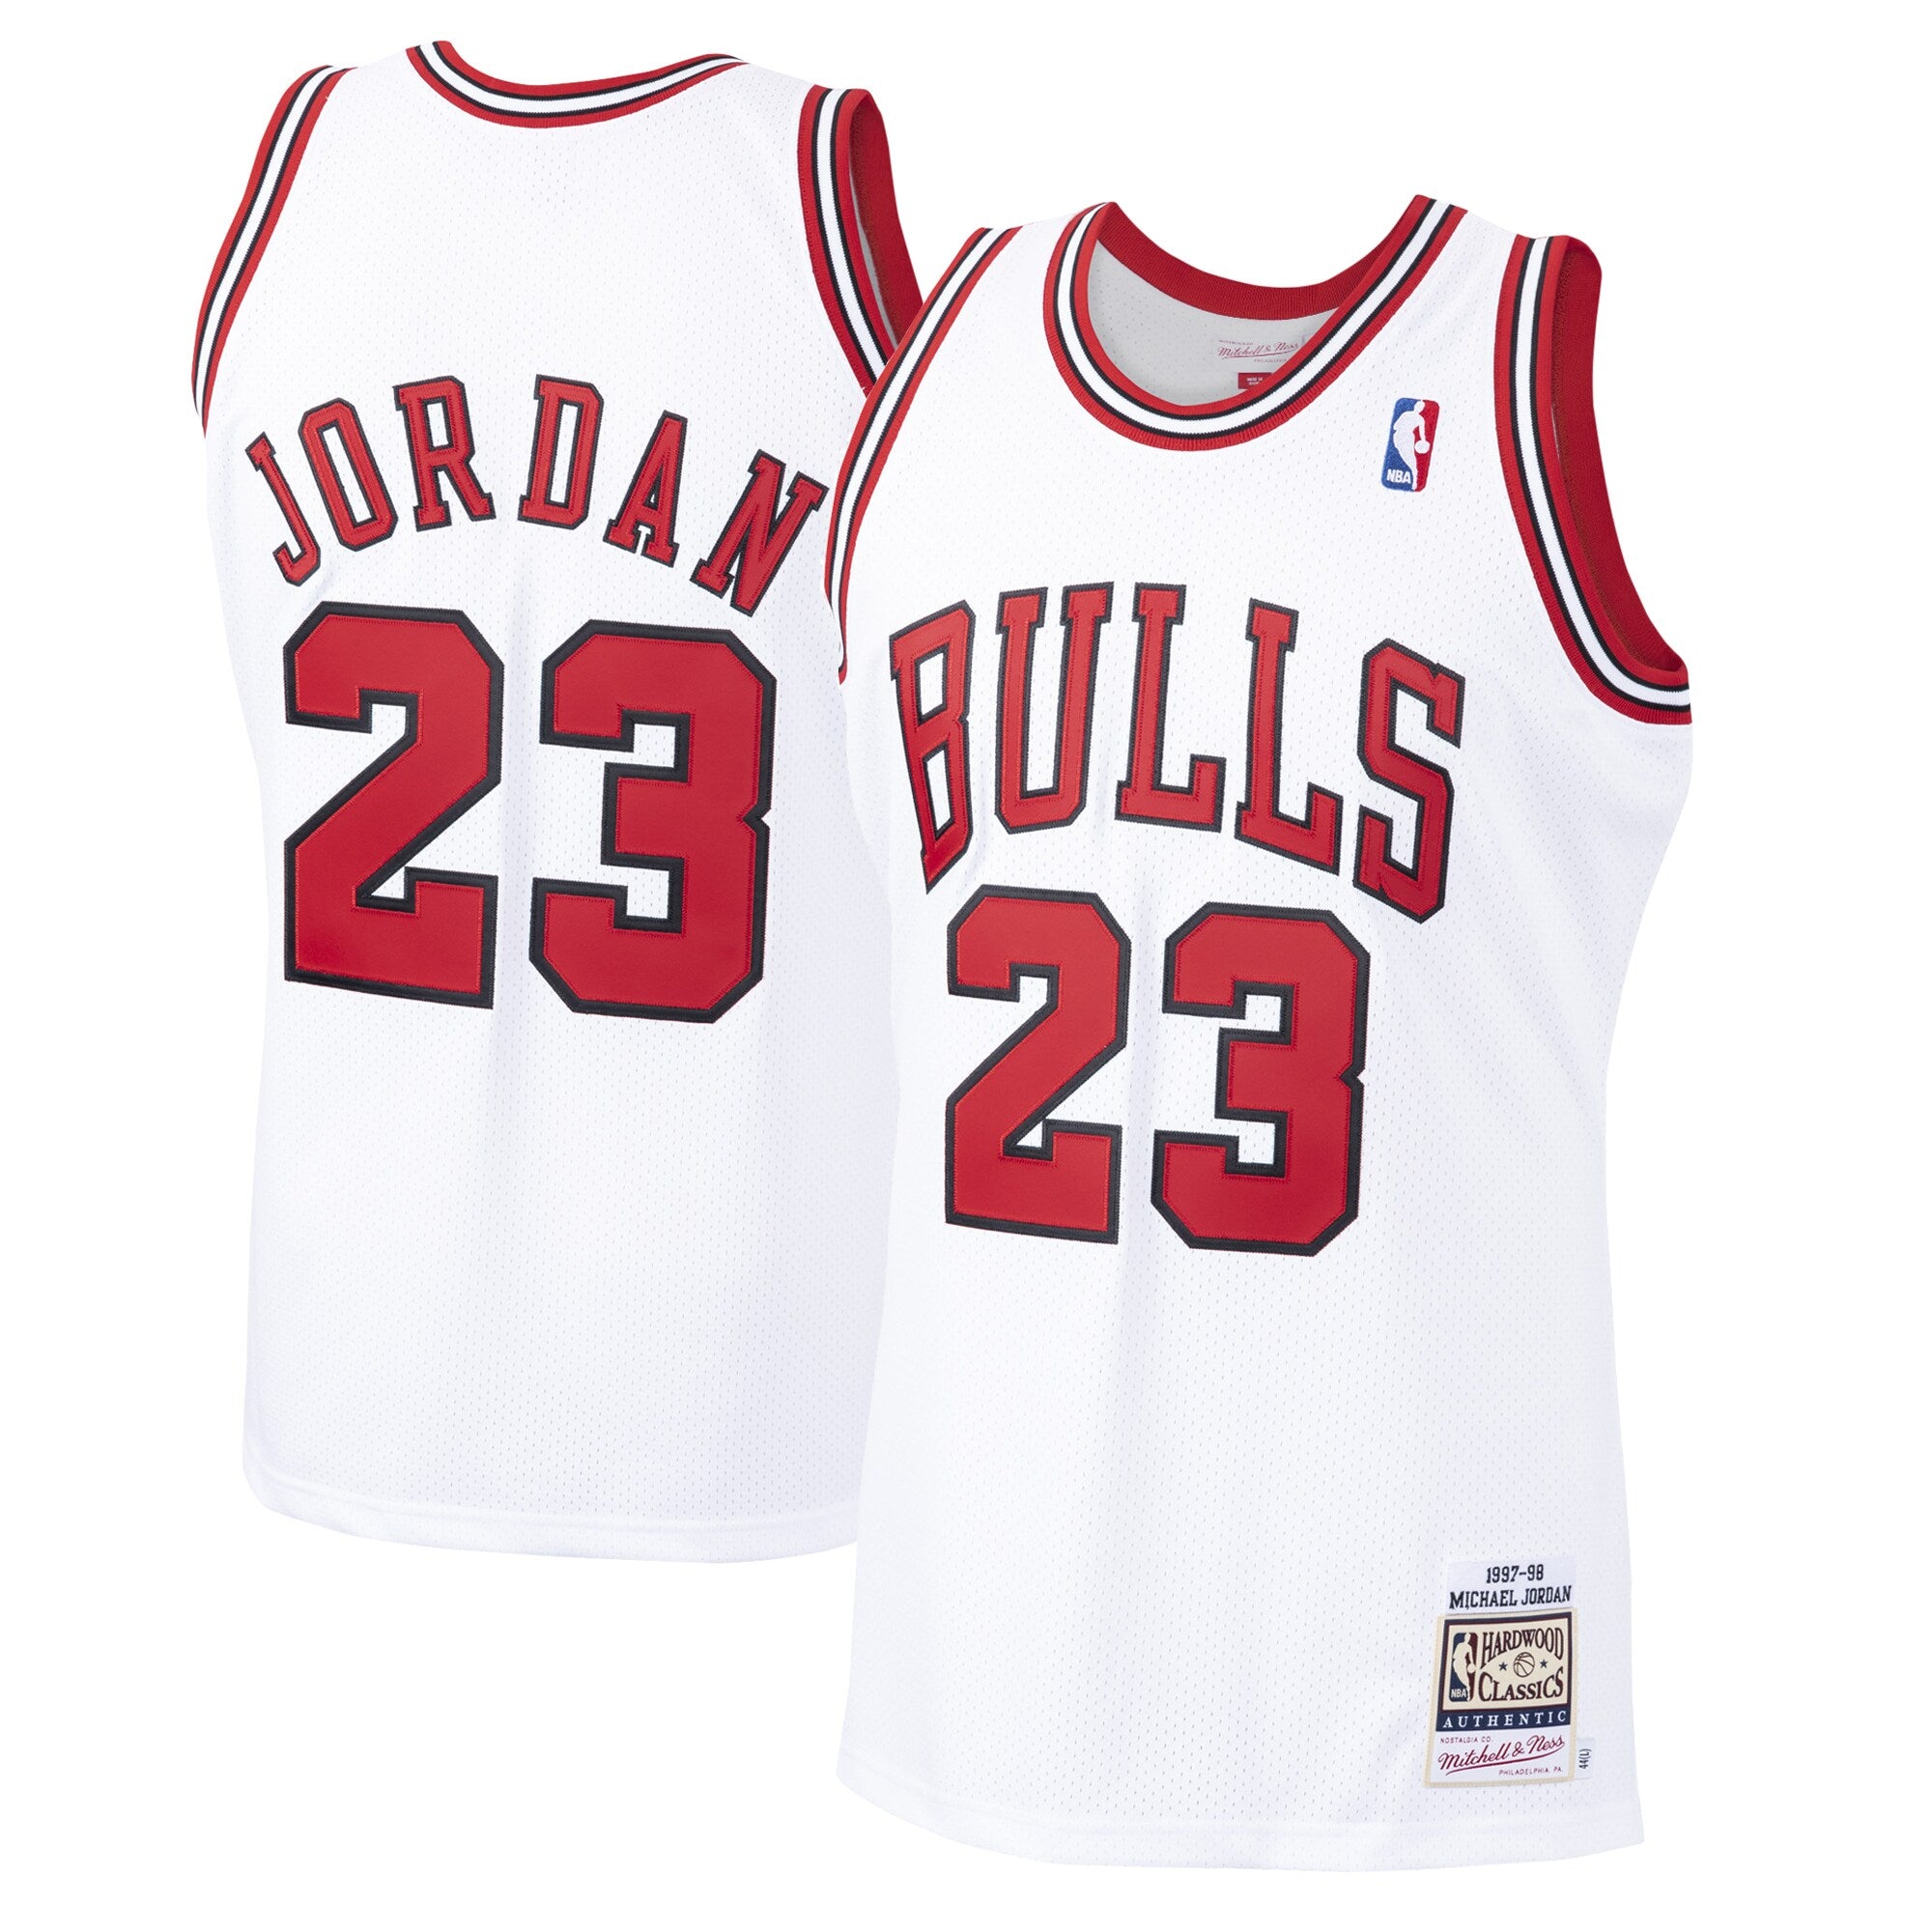 Officially Licensed Gear

Men's Chicago Bulls Michael Jordan Mitchell & Ness Hardwood Classics Authentic Jersey